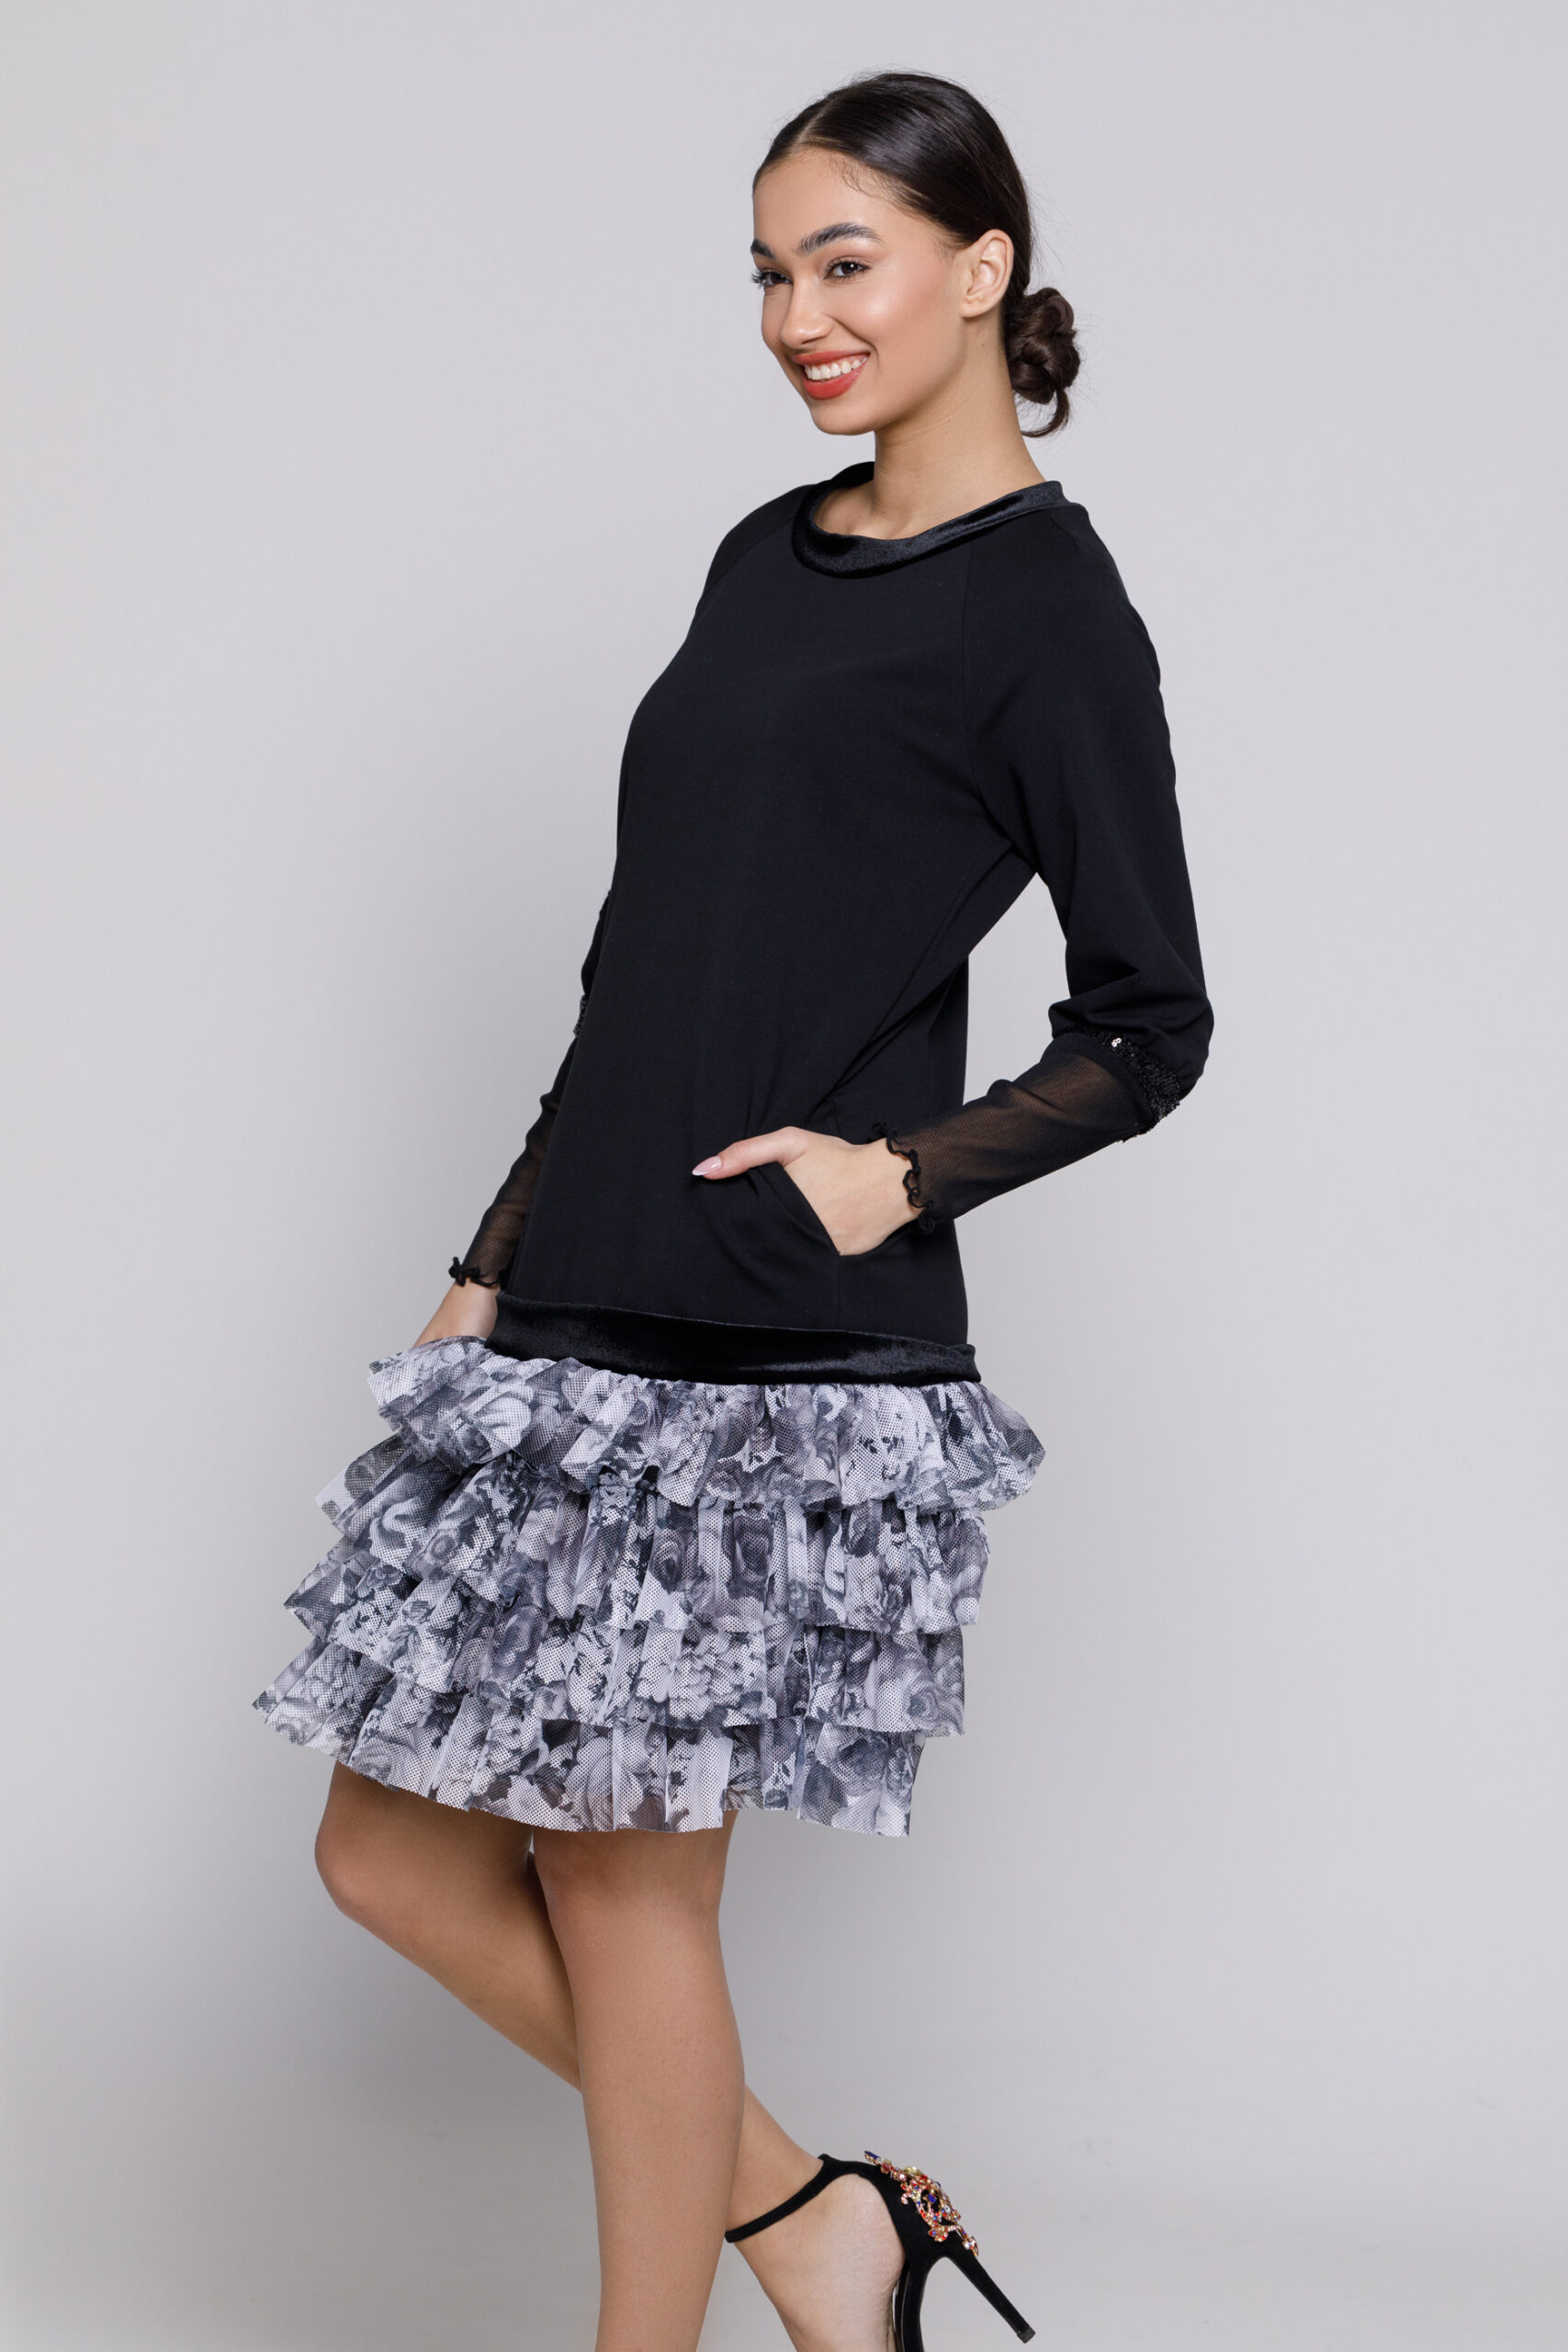 ABINA black dress with black and white frills. Natural fabrics, original design, handmade embroidery